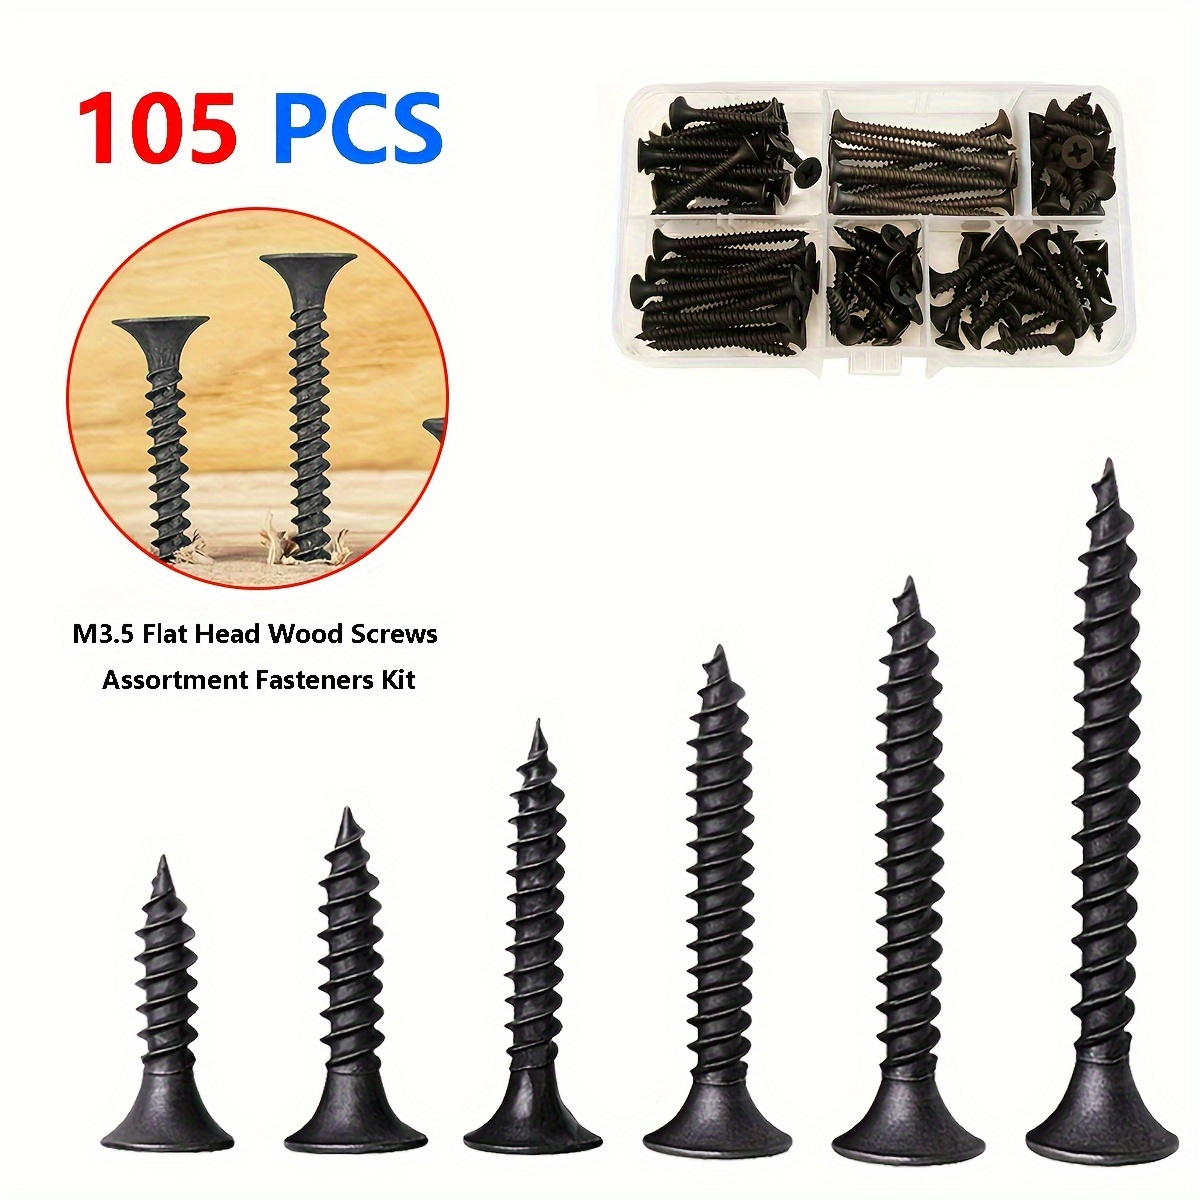 1100pcs M2 Nickel-plated Flat Head Screws,screws,small Screws,screws Set,8  Sizes(4mm-20mm)